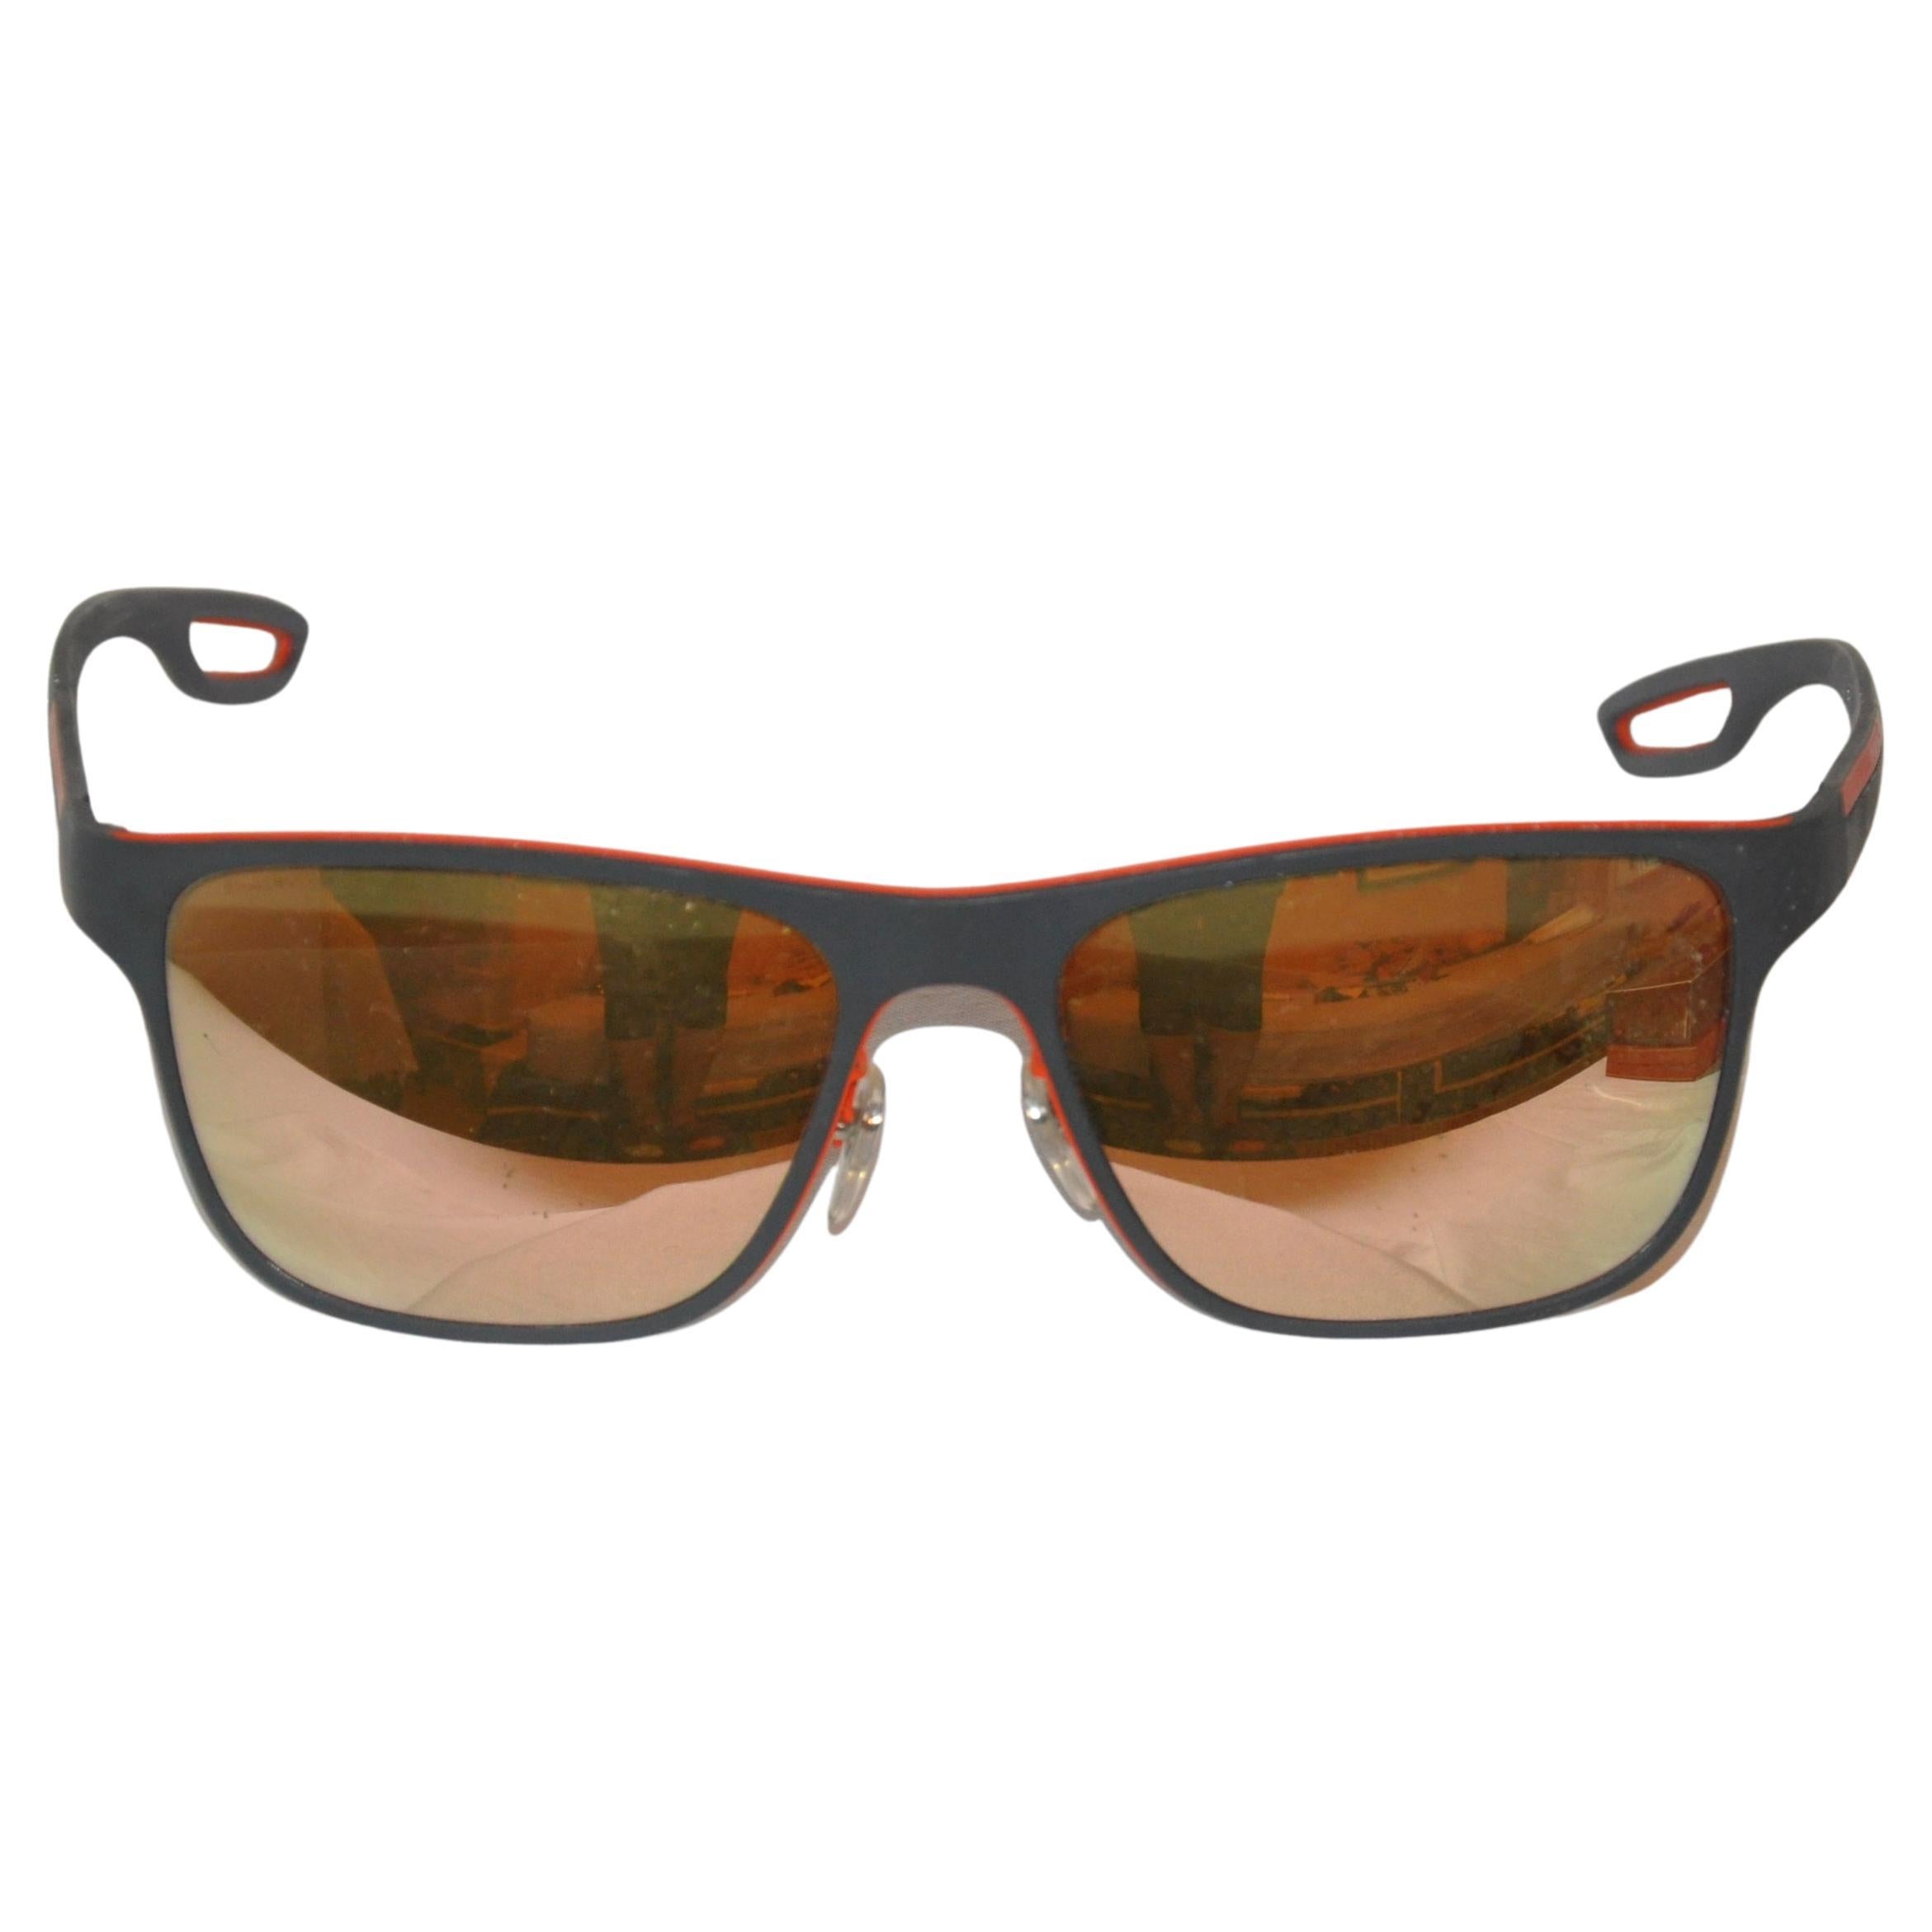 Prada Sunglasses for sale in Munich, Germany | Facebook Marketplace |  Facebook